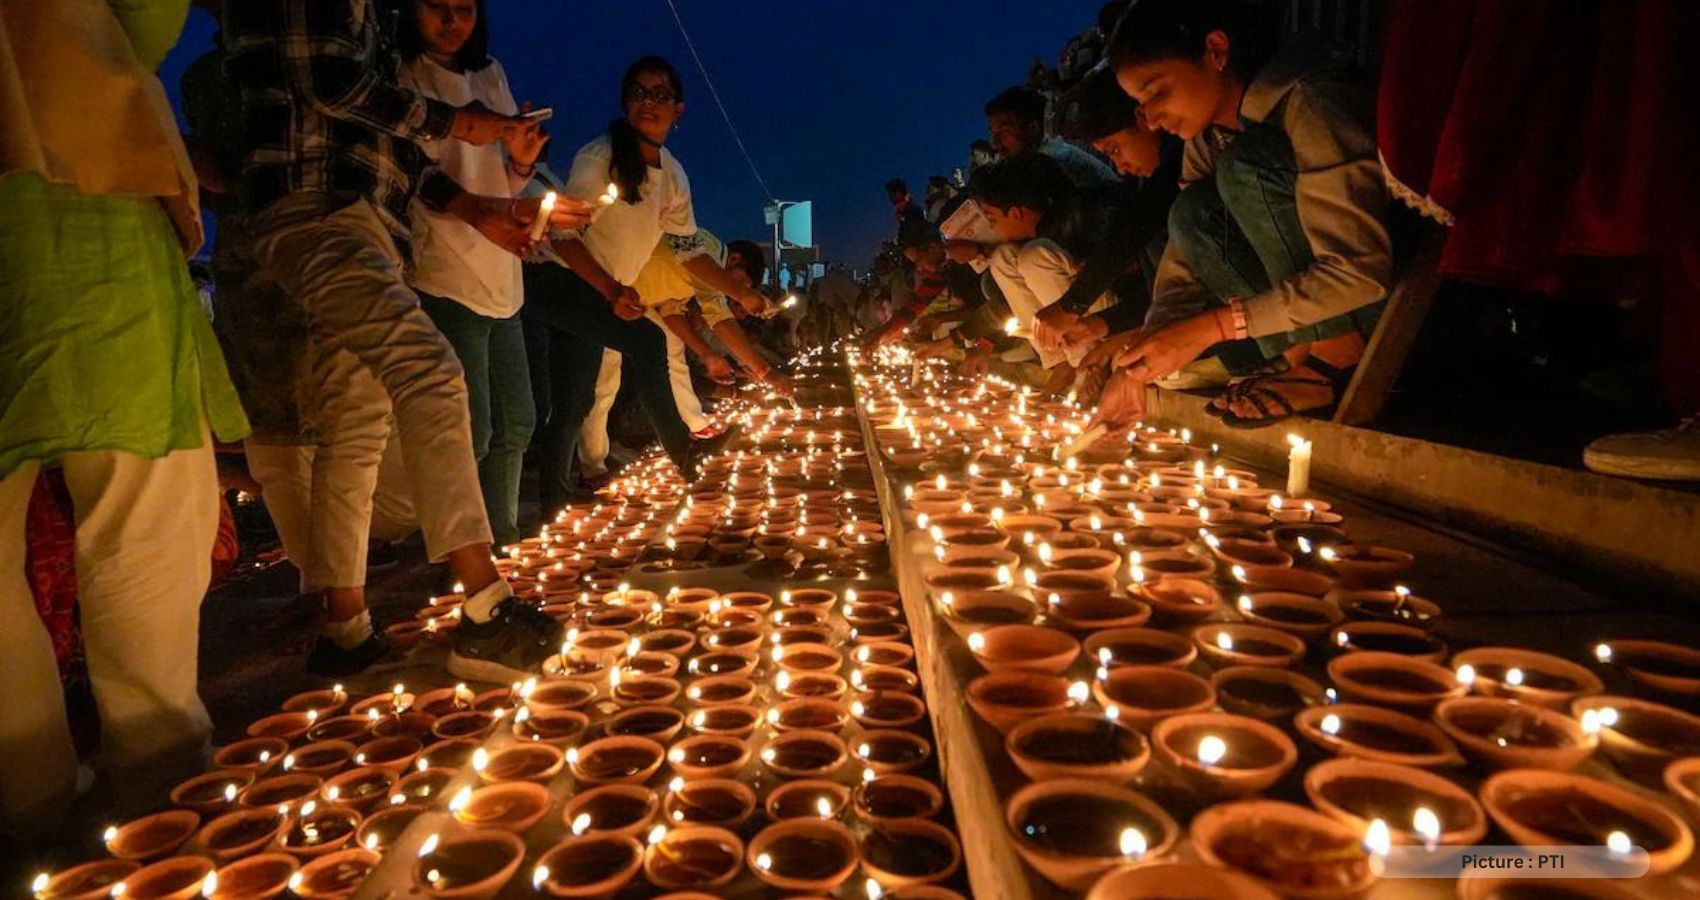 Ayodhya Illuminates with Record-Breaking 22.23 Lakh Diyas in Deepotsav Celebration, Sets New Guinness World Record Ahead of Ram Temple Inauguration